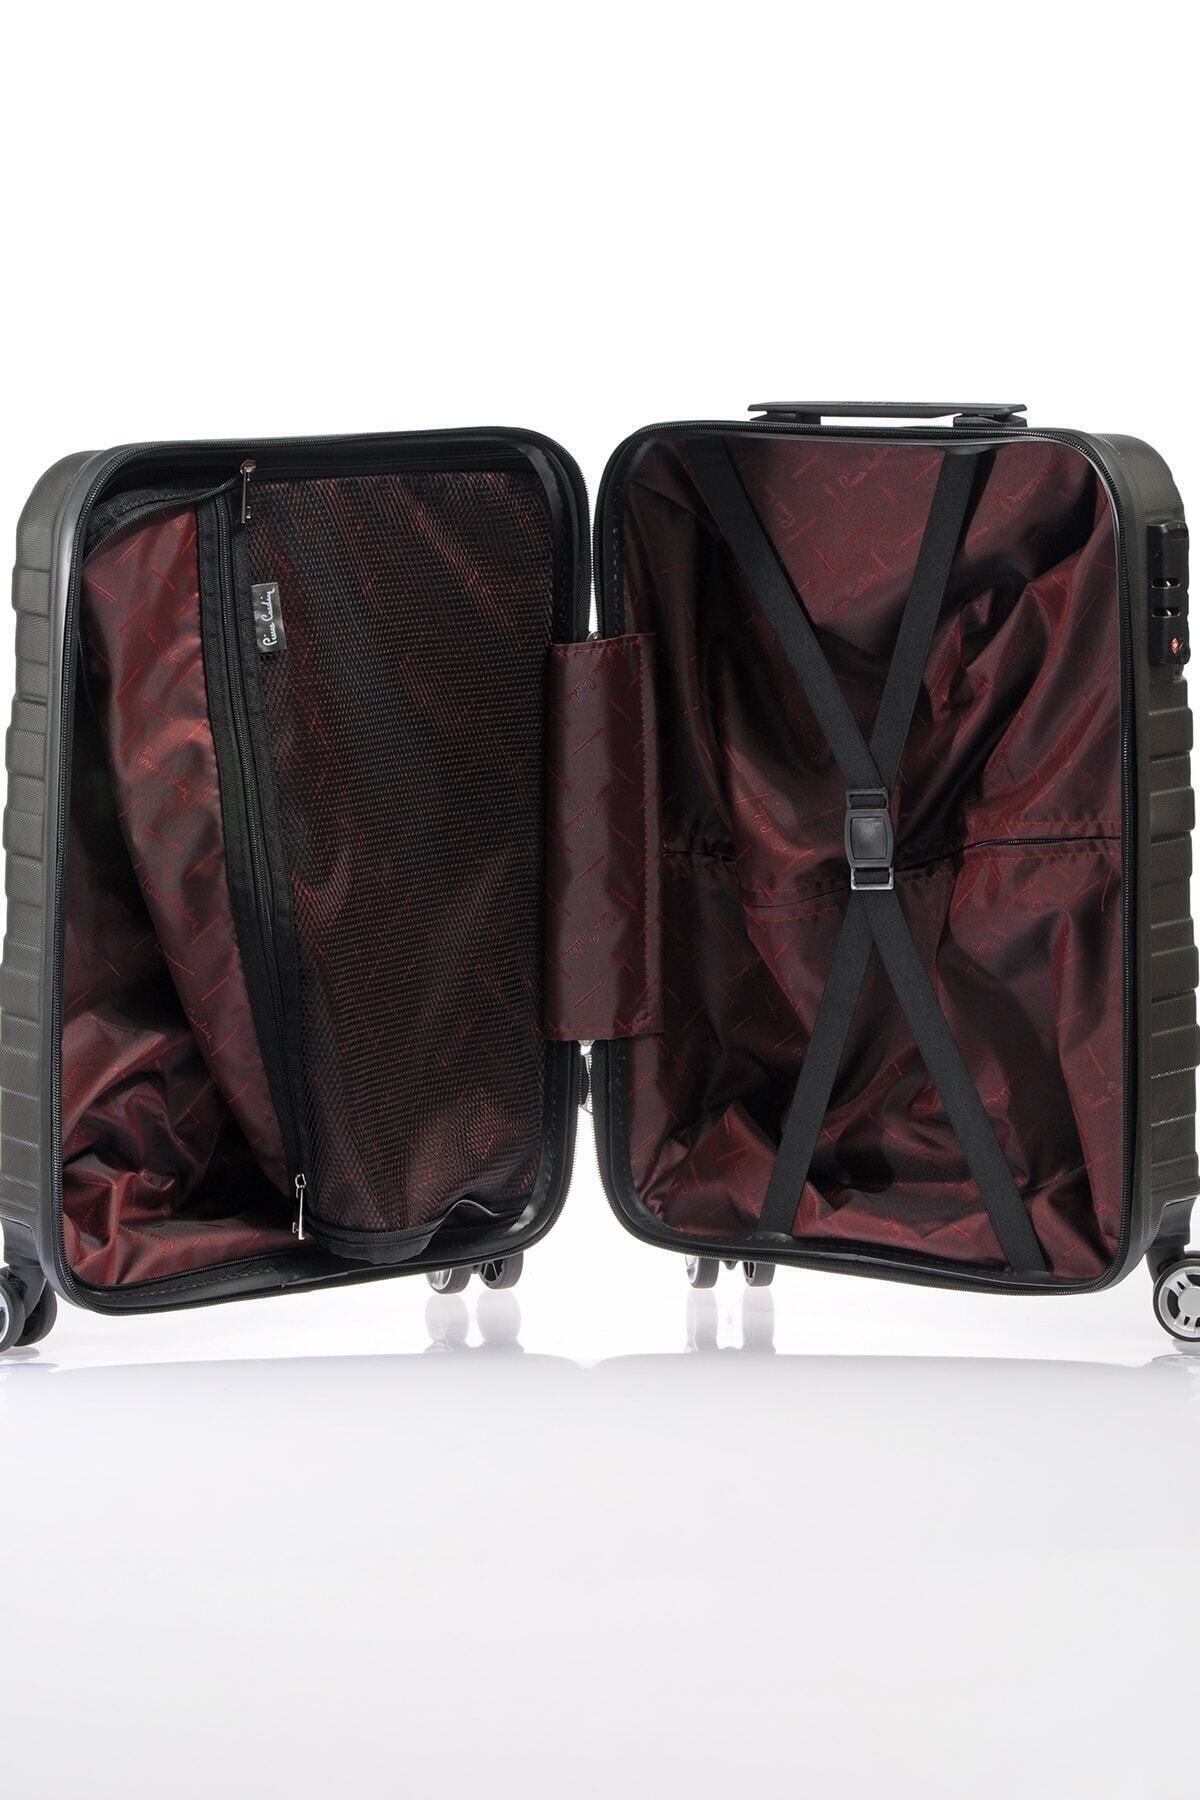 Pierre Cardin 1401-03 چمدان اندازه کابین غافلگیرانه Anthracit